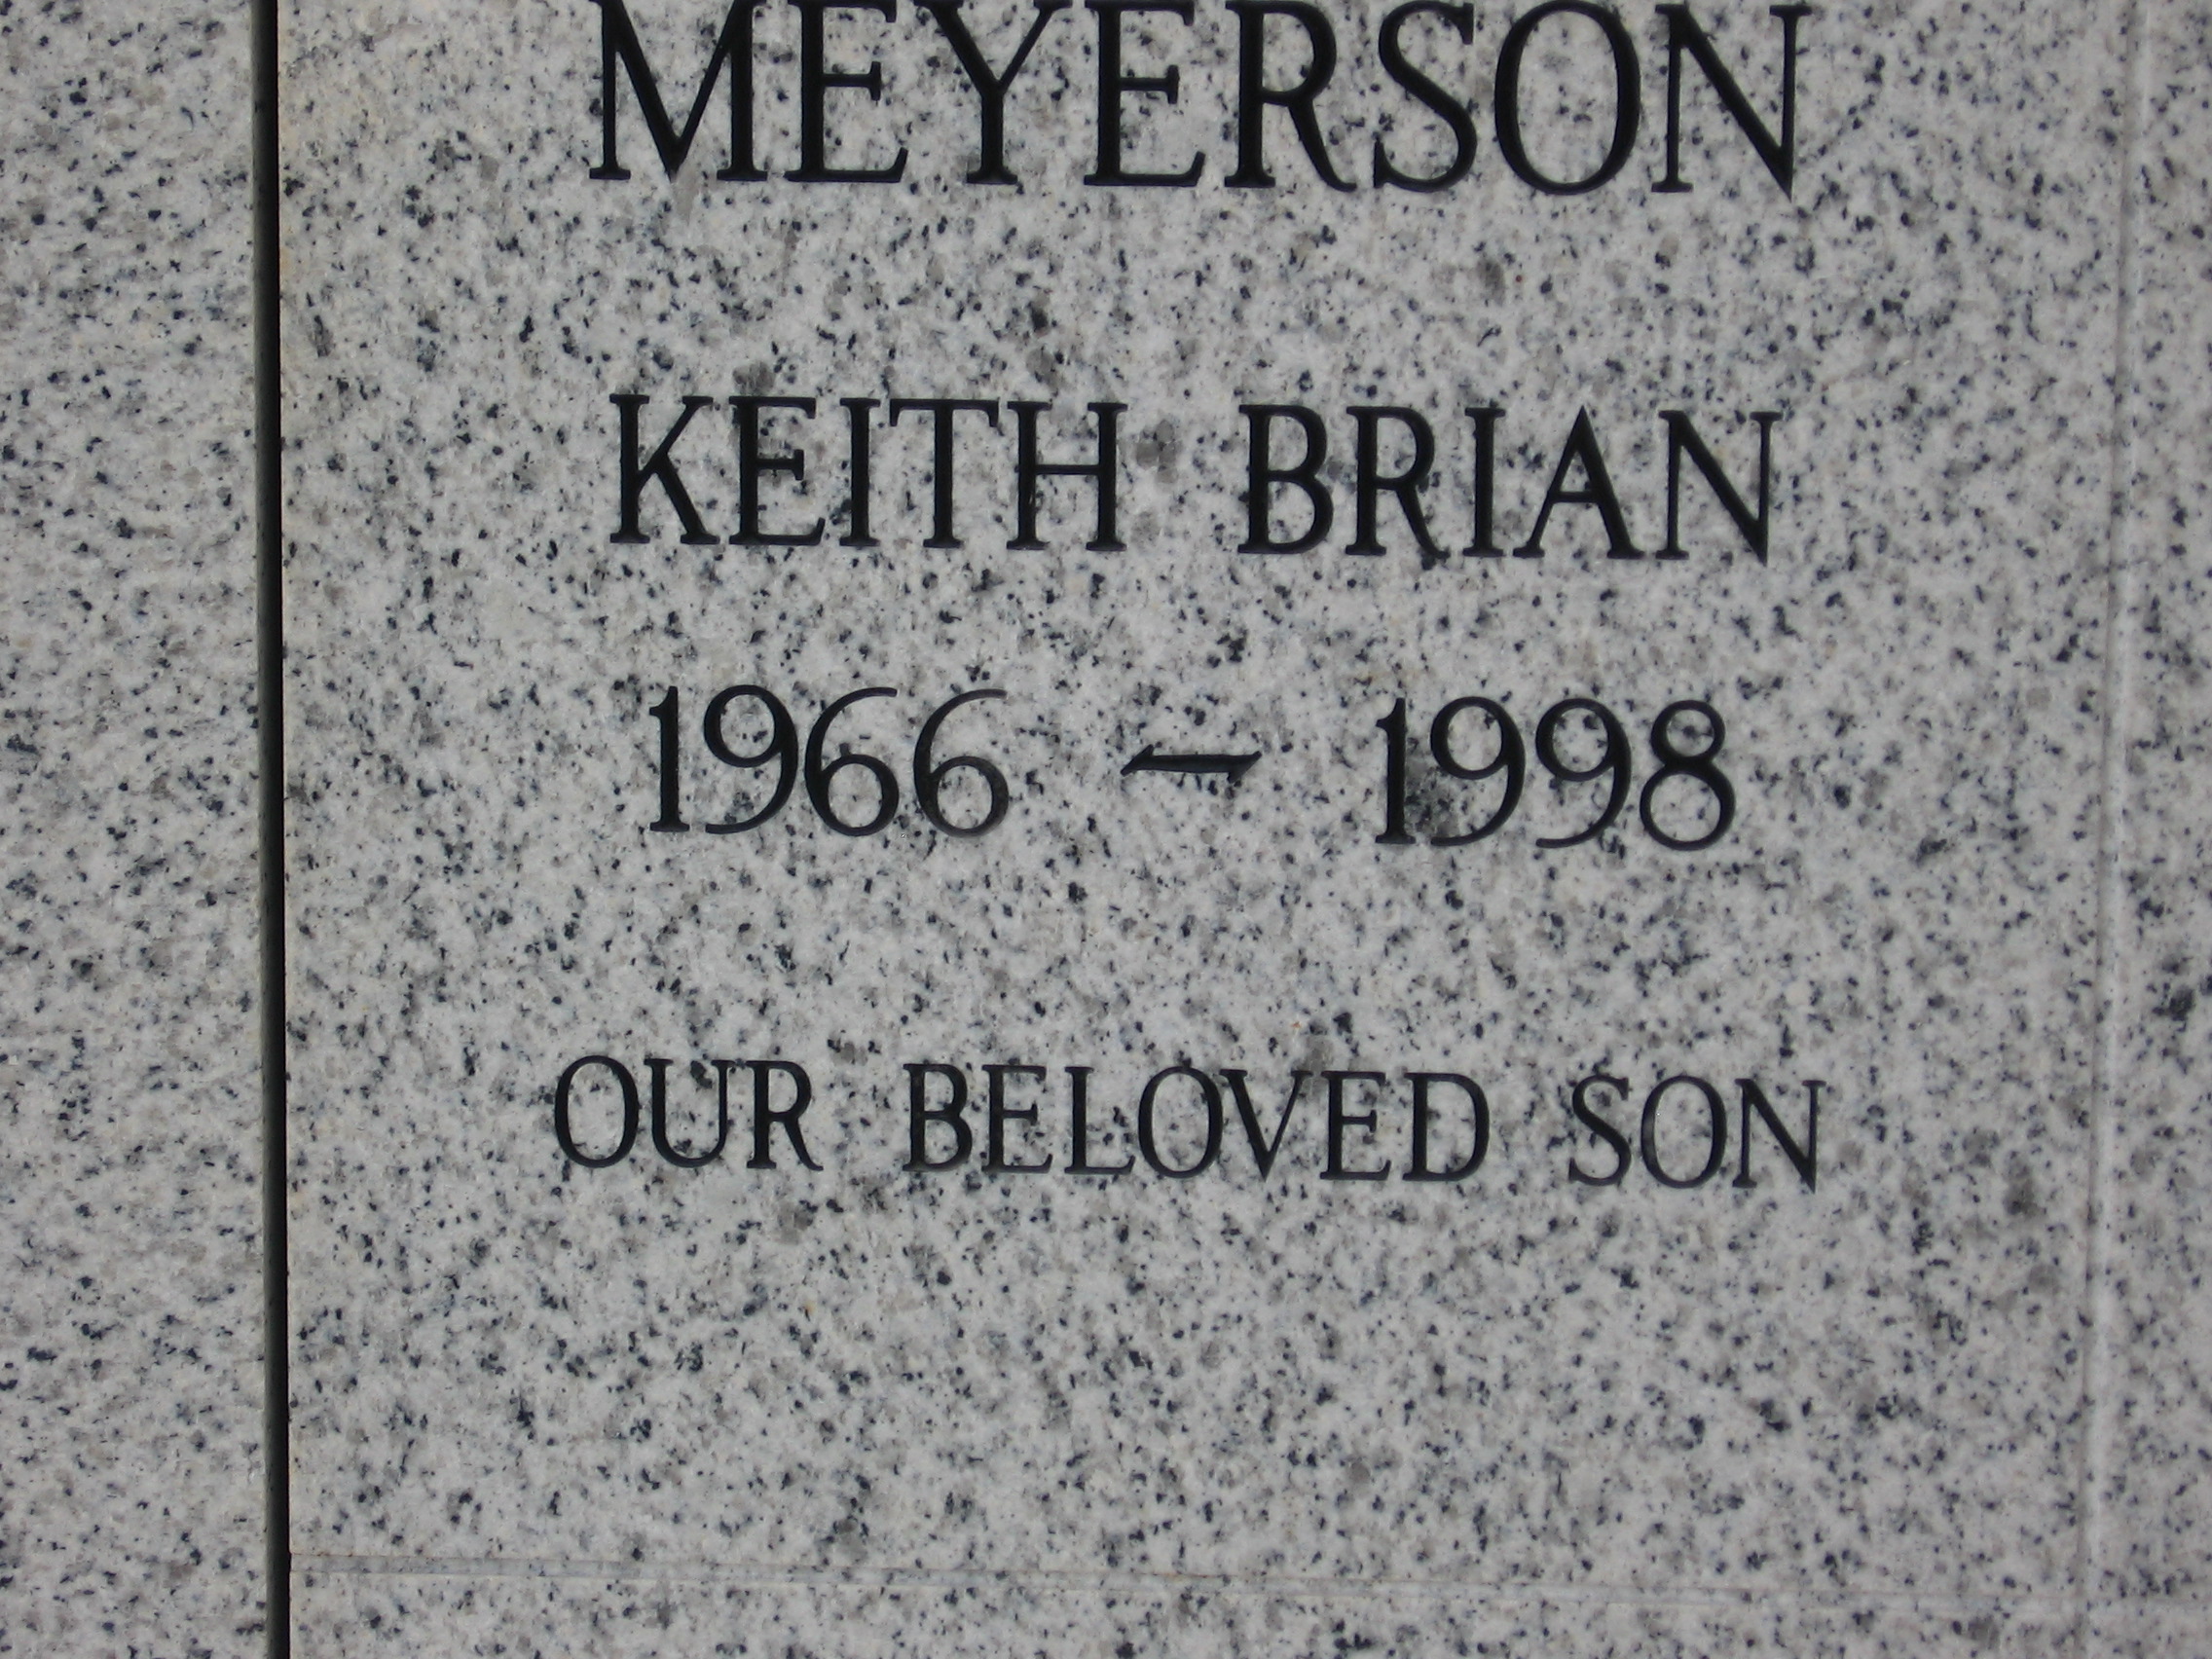 Keith Brian Meyerson